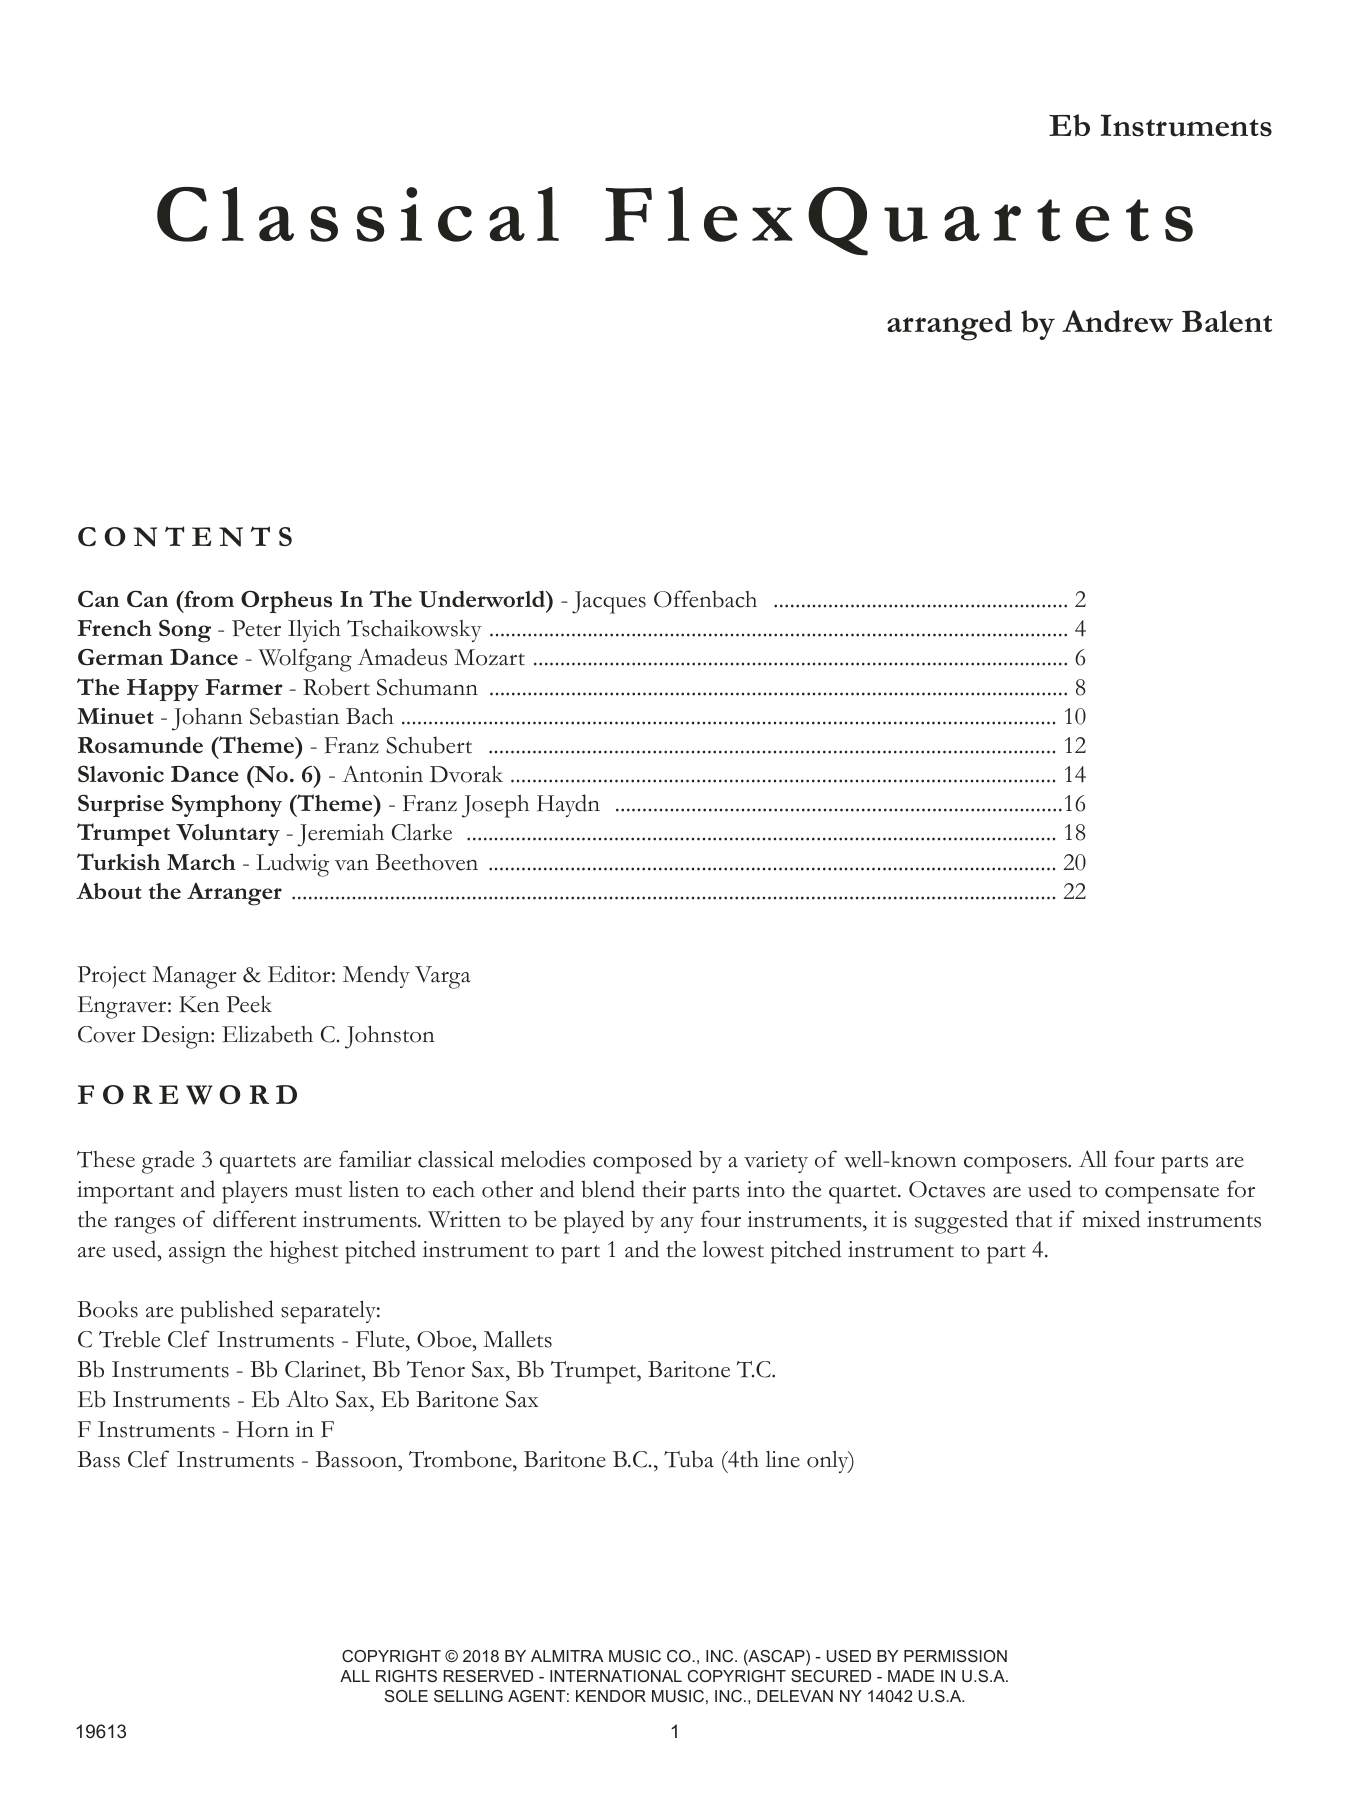 Download Andrew Balent Classical Flexquartets - Eb Instruments Sheet Music